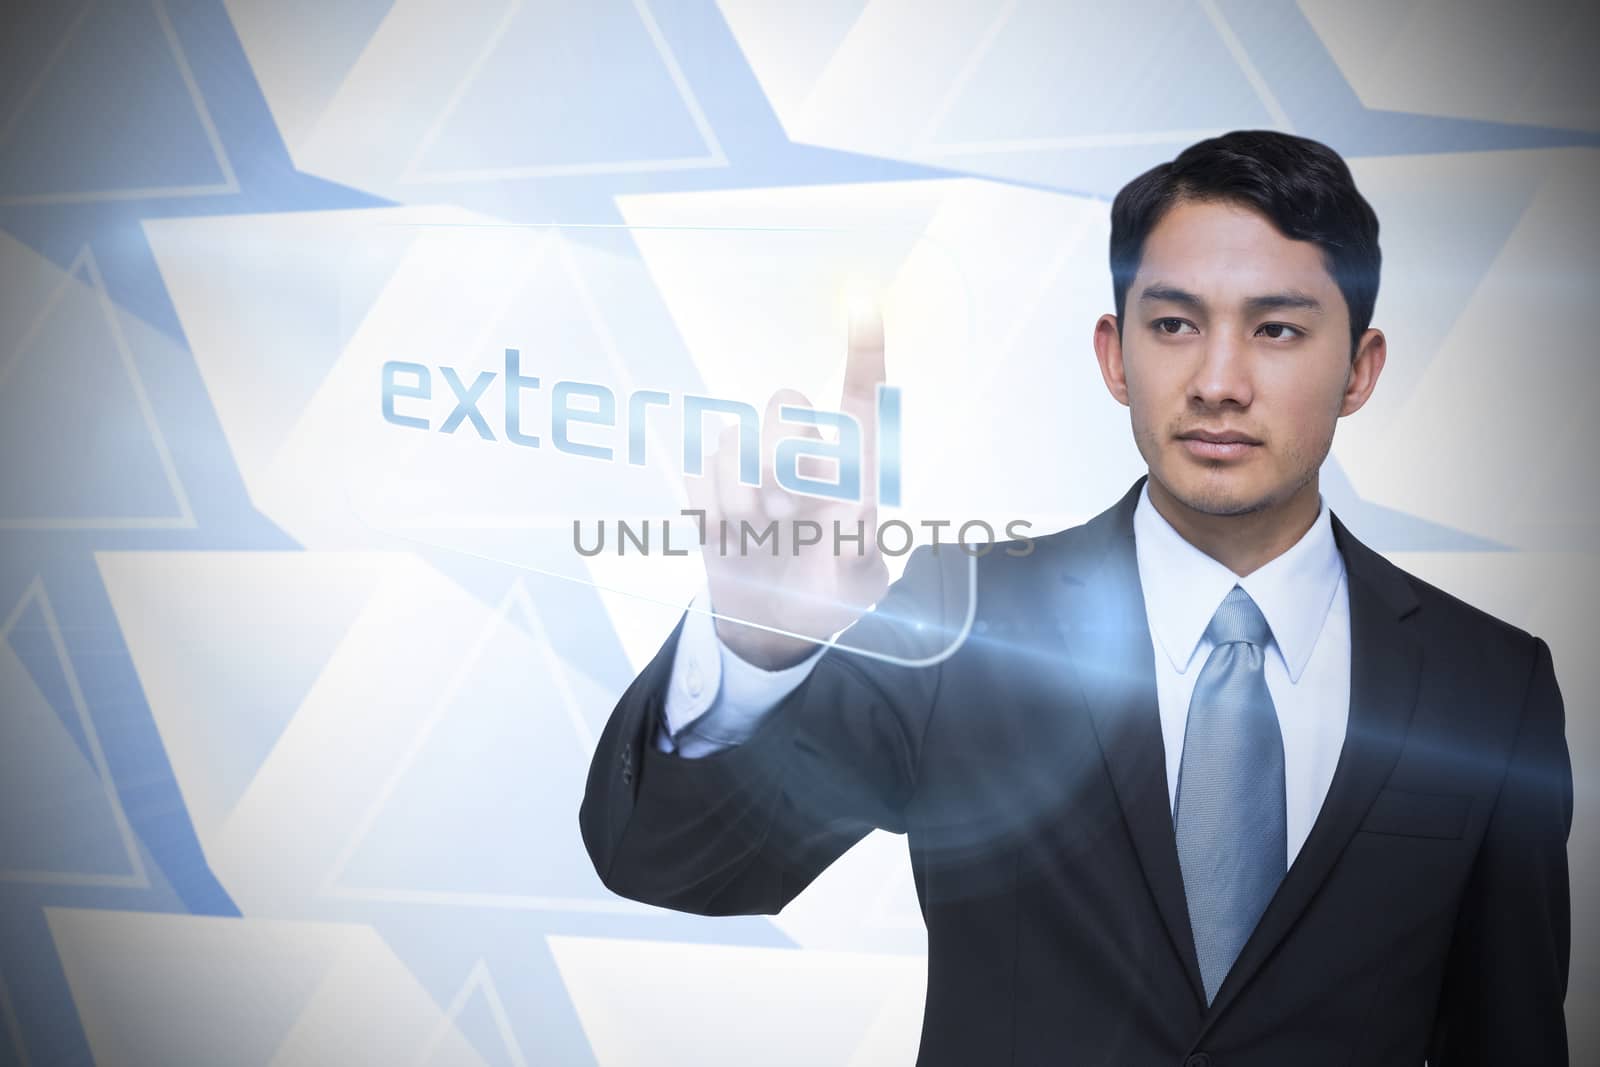 Businessman pointing to word external by Wavebreakmedia